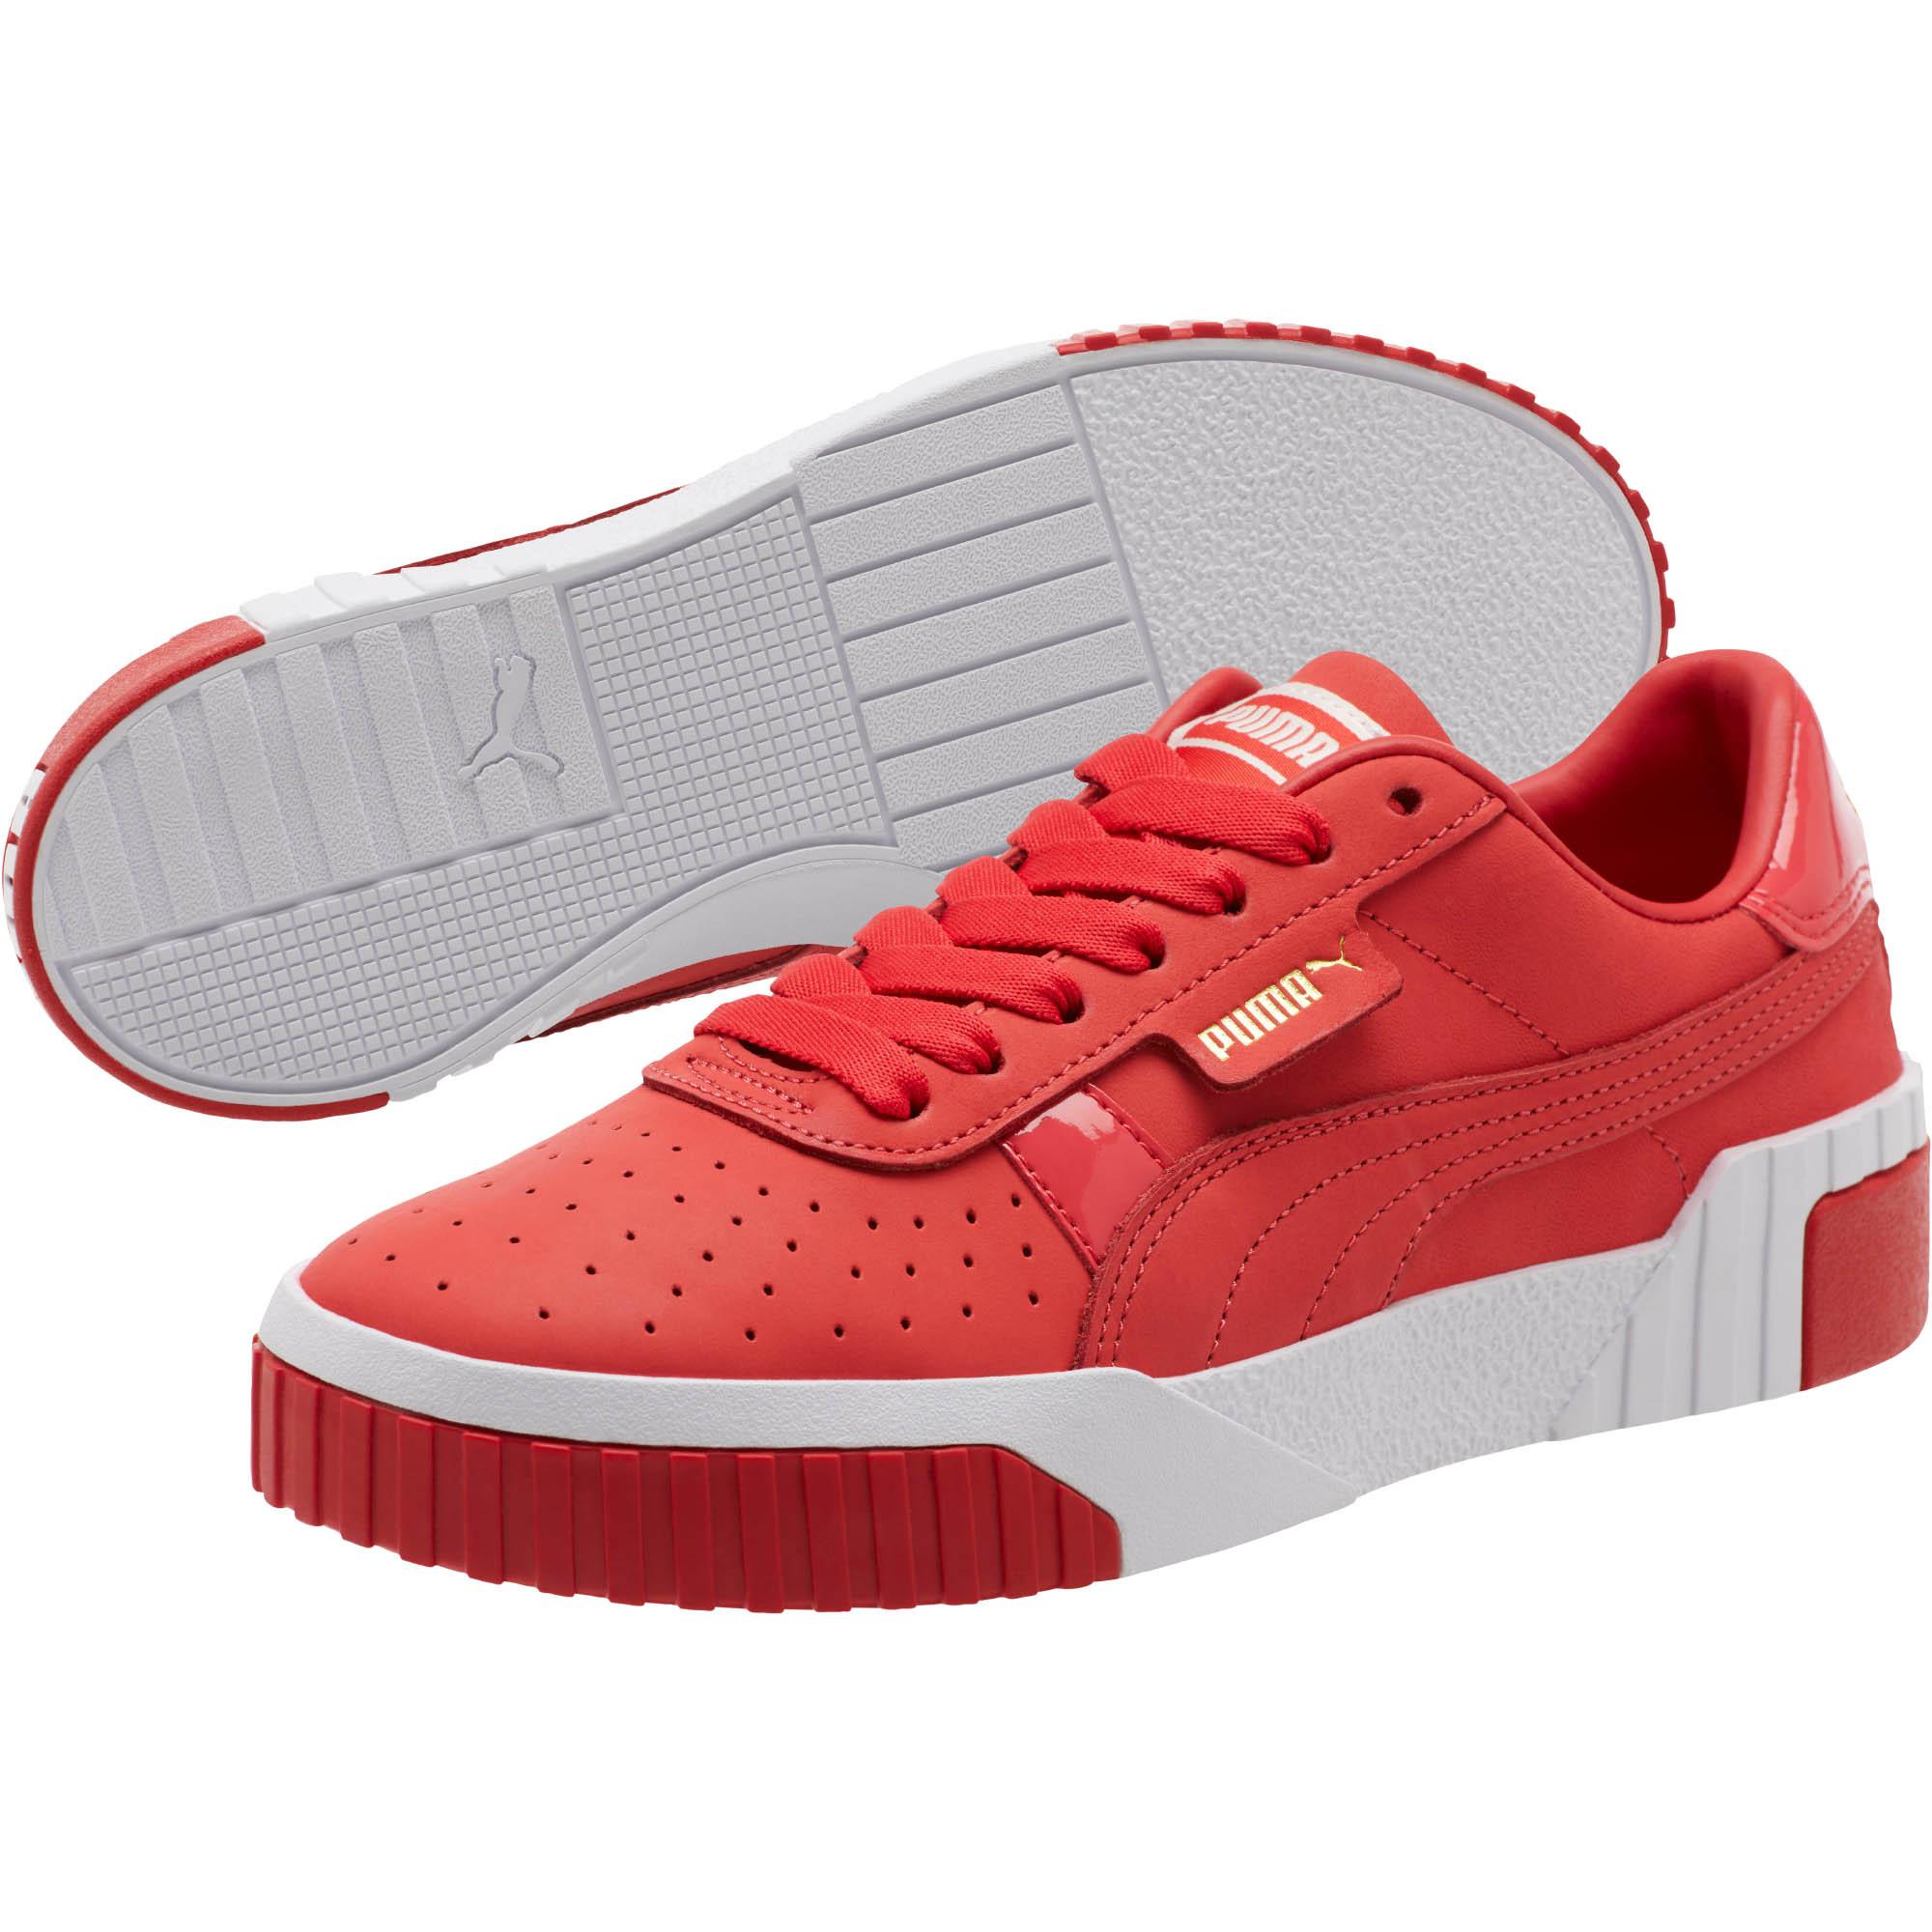 PUMA Lace Cali Nubuck Women's Sneakers in Red | Lyst